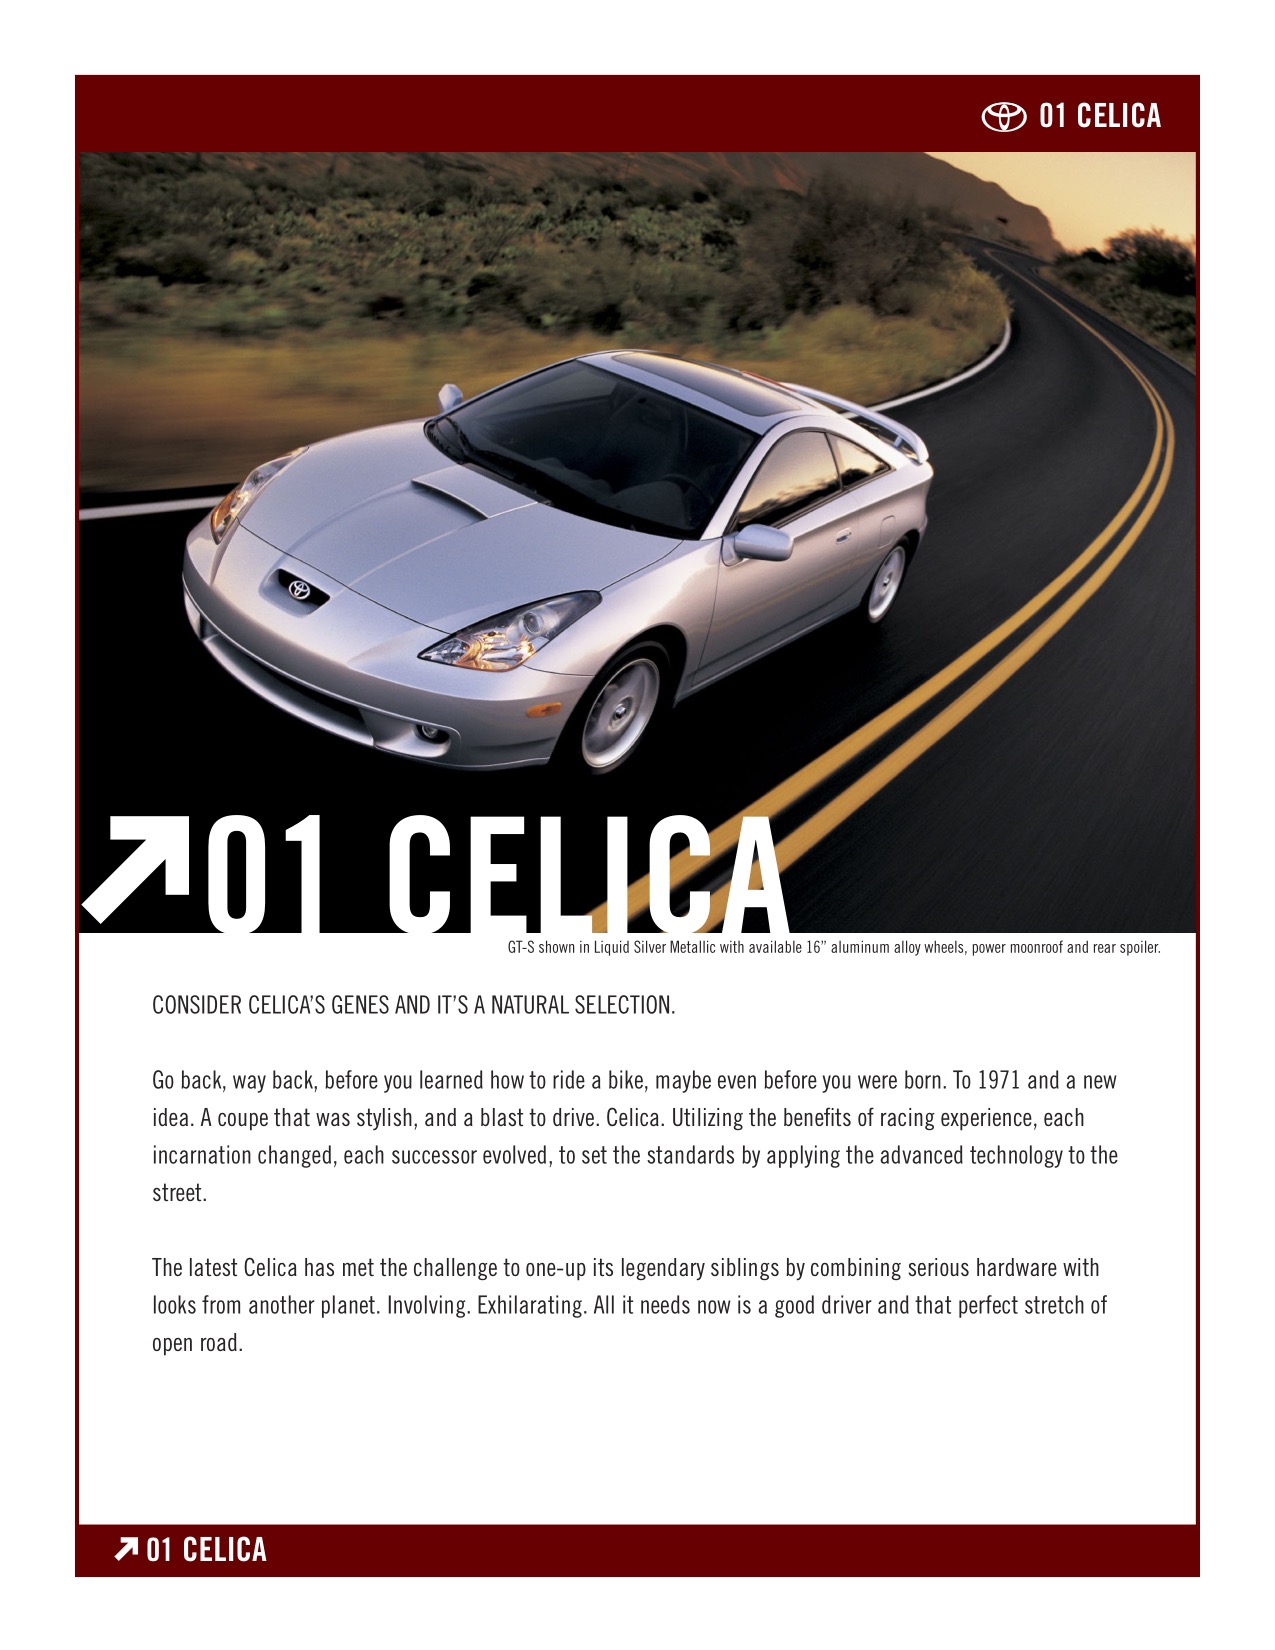 2001 Toyota Celica Brochure